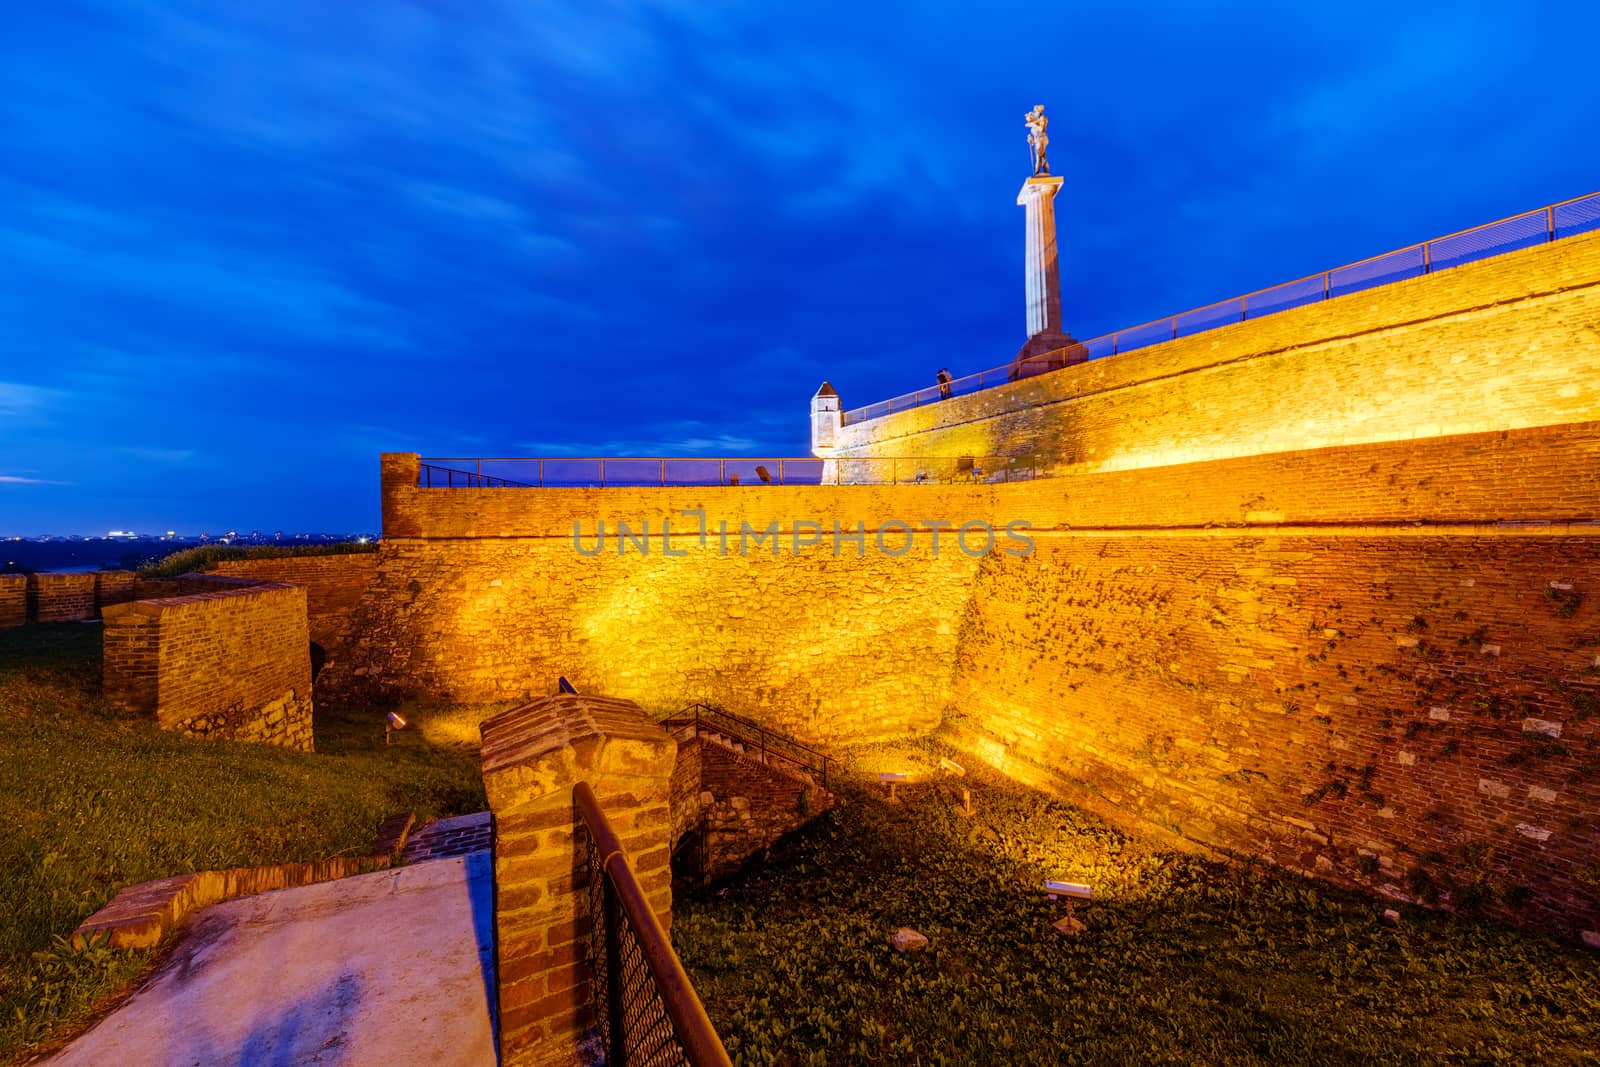 Belgrade fortress and Kalemegdan park by vladimirnenezic